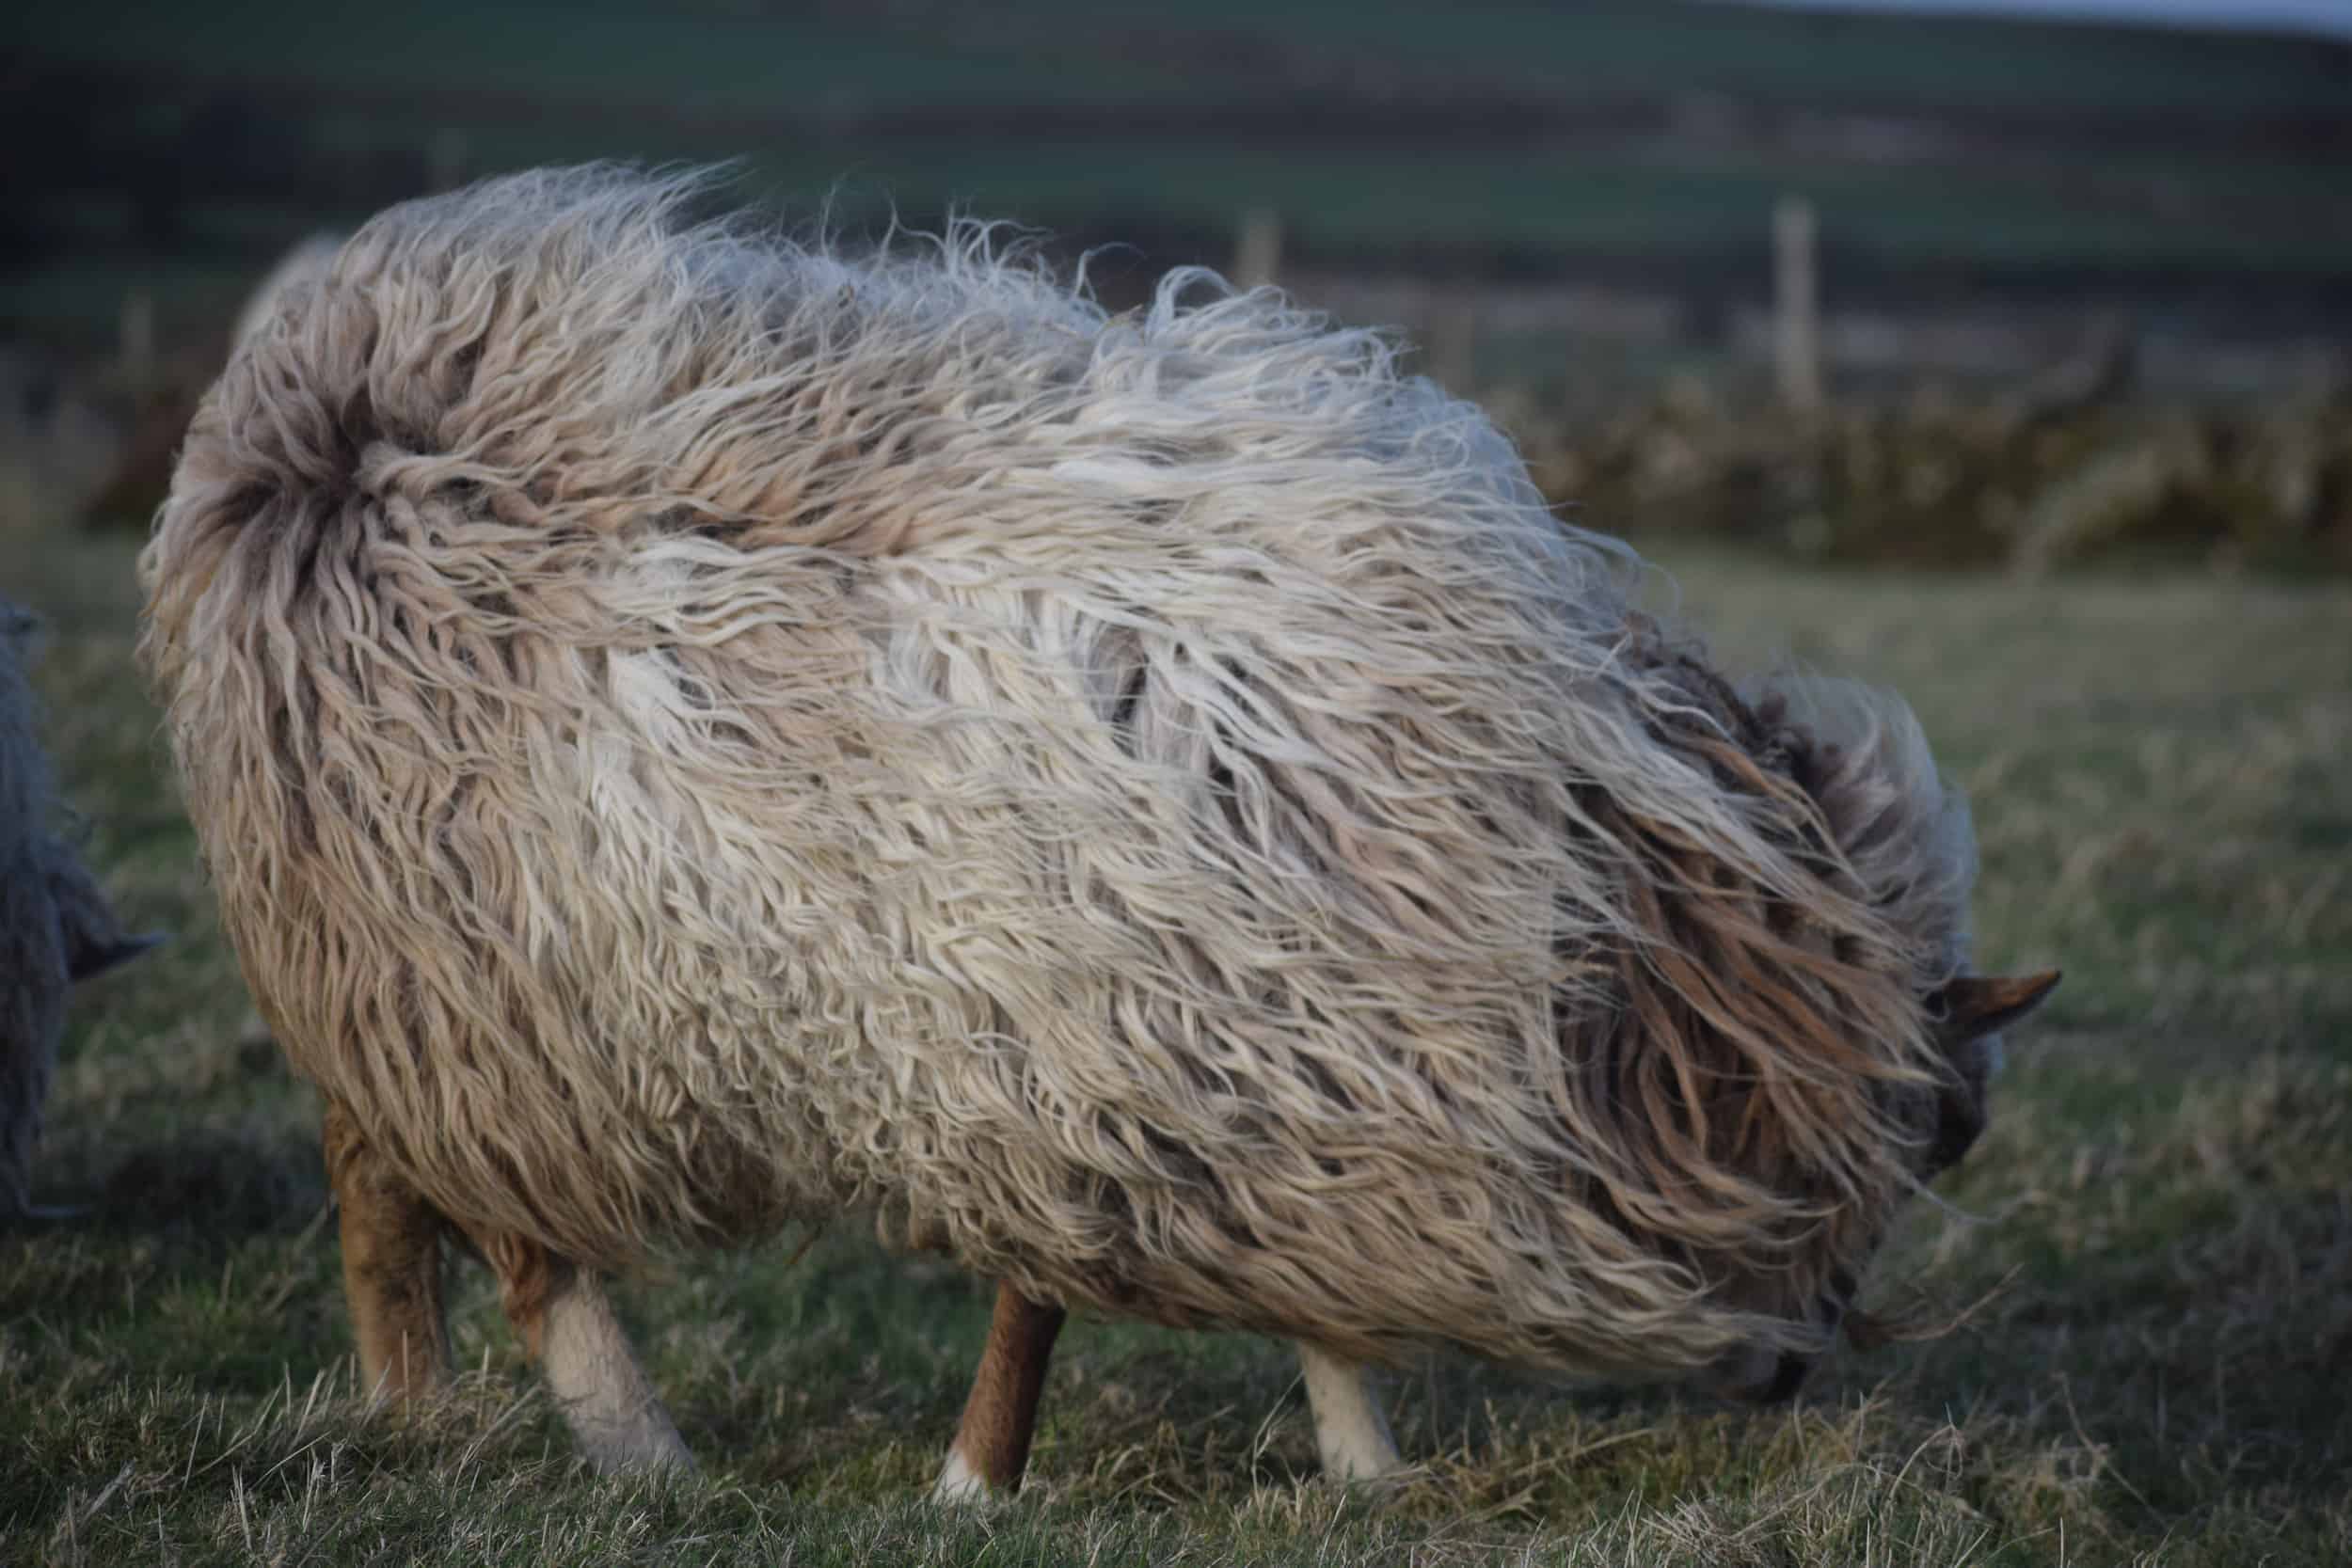 Dandelion felted fleece icelandic cross shetland jacob sheep grey moorit mouflon spotted pet sheep wool gifts